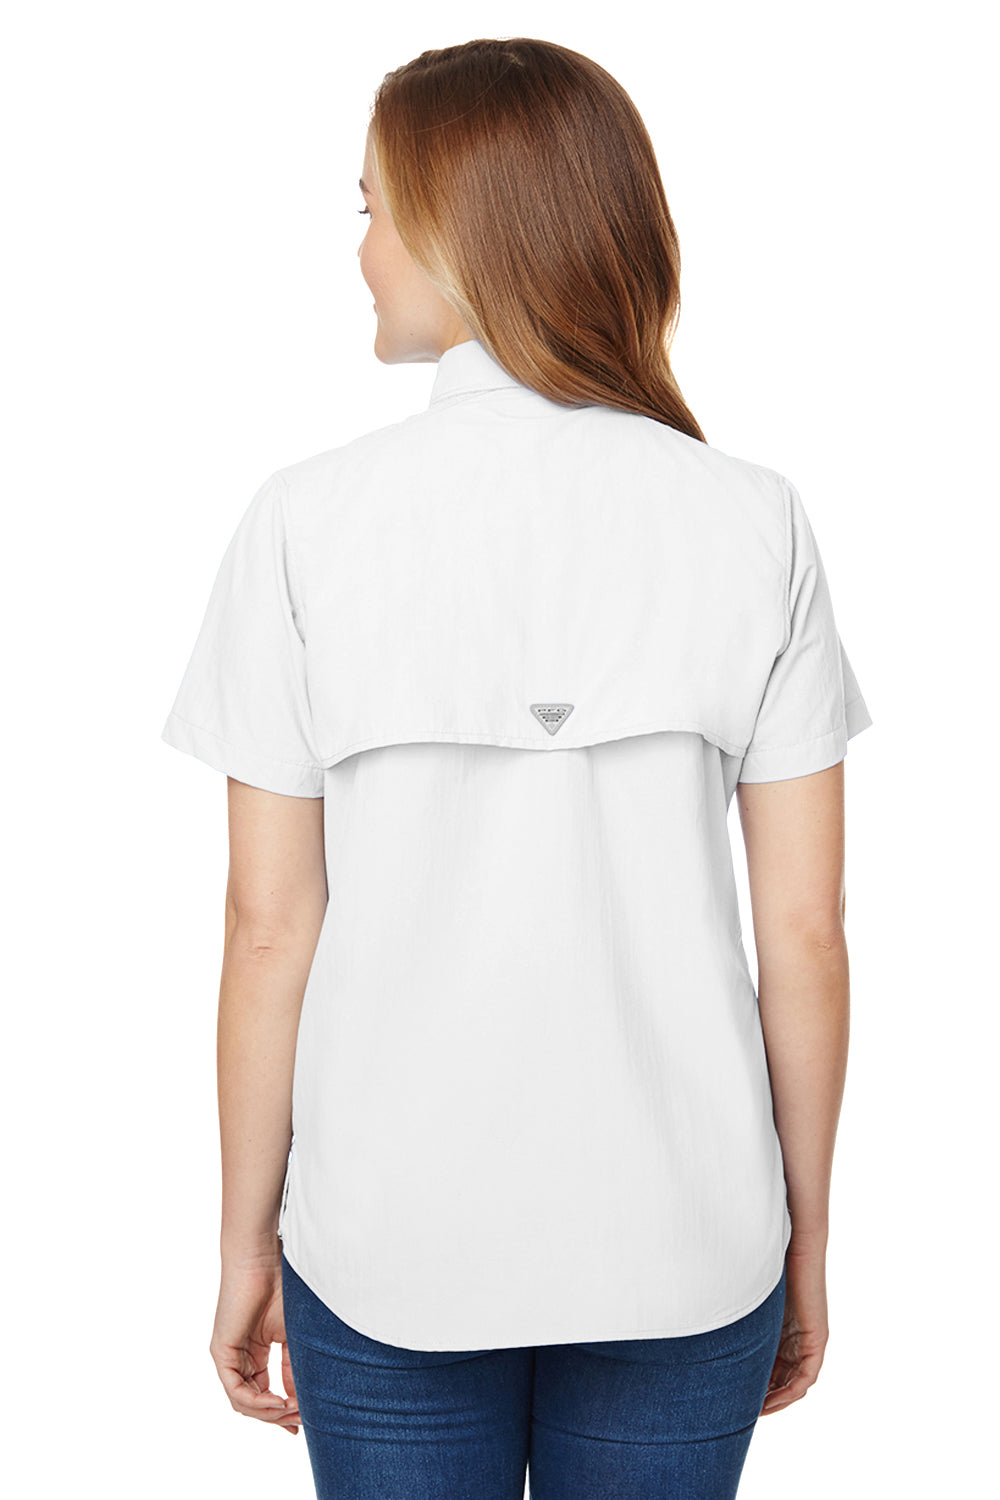 Columbia 7313 Womens Bahama Moisture Wicking Short Sleeve Button Down Shirt w/ Double Pockets White Back